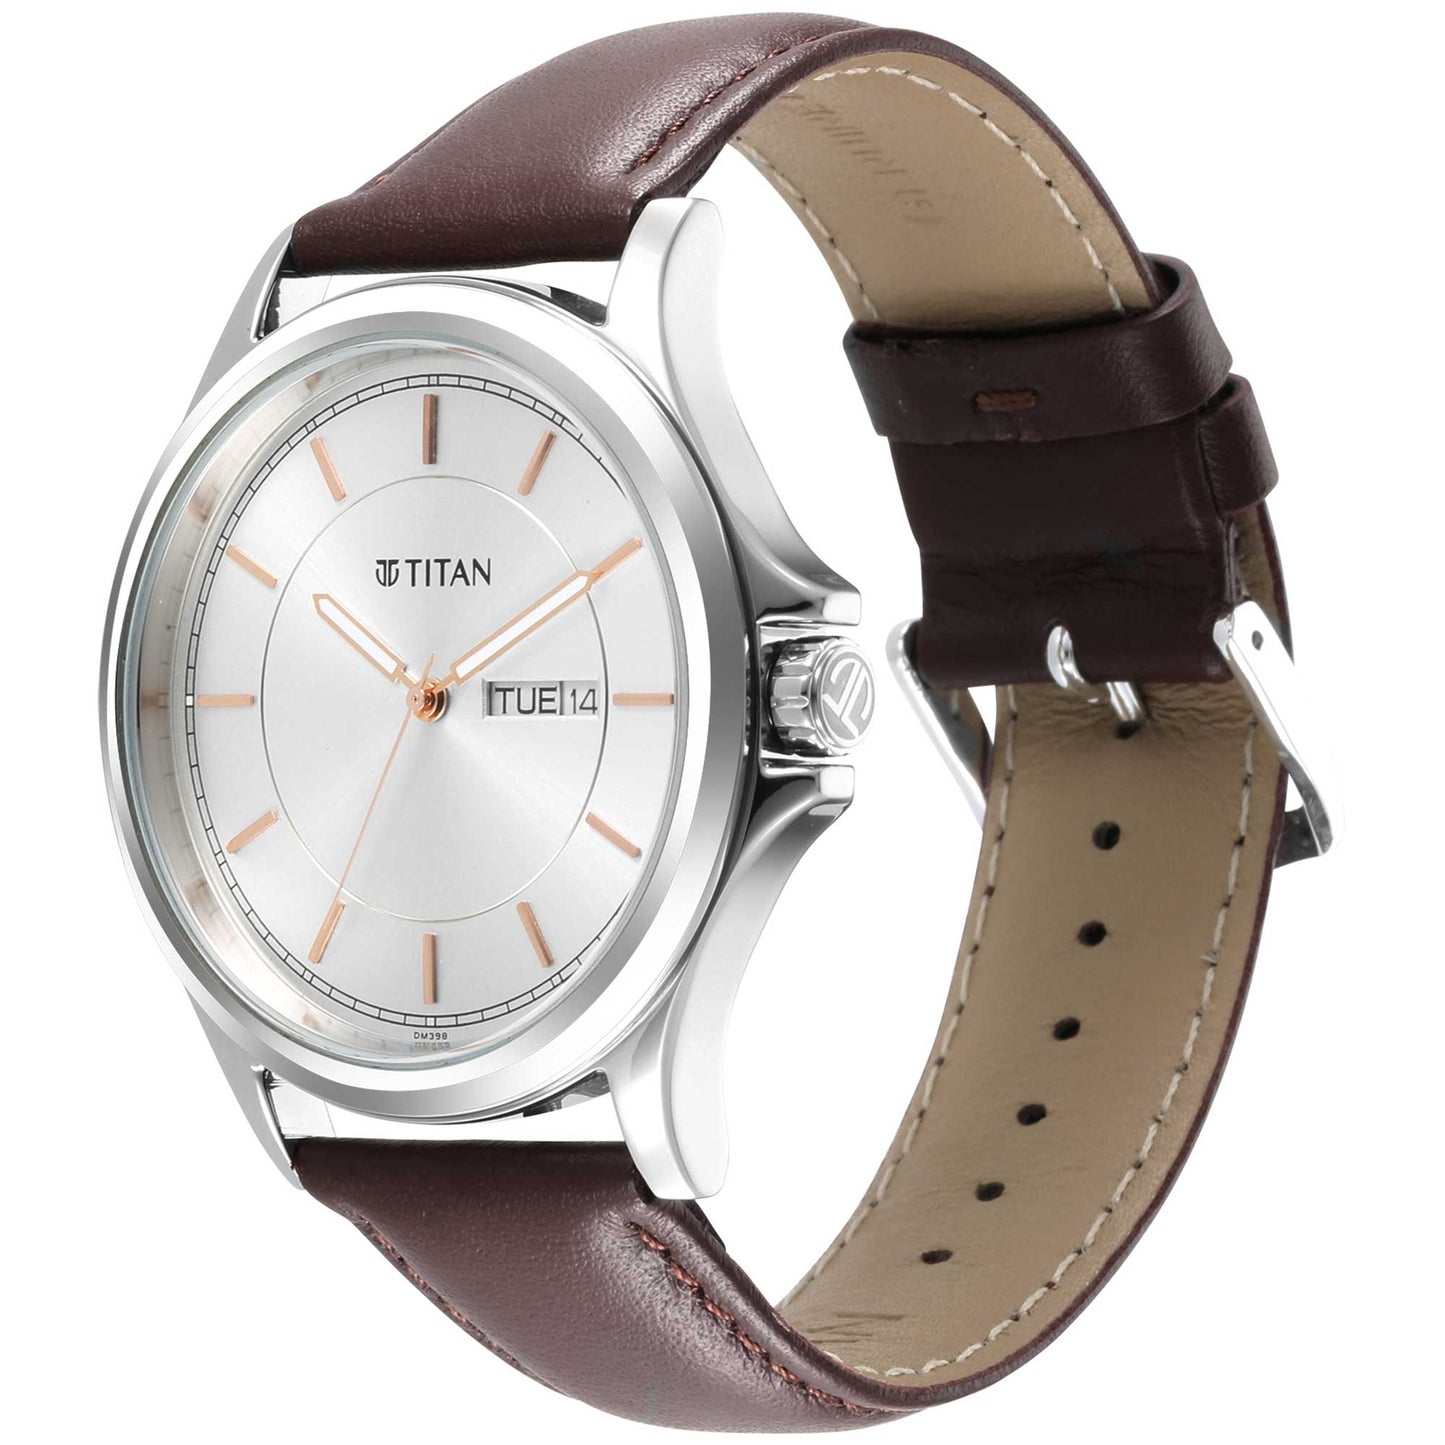 Titan Quartz Analog Silver White Dial Leather Strap Watch for Men